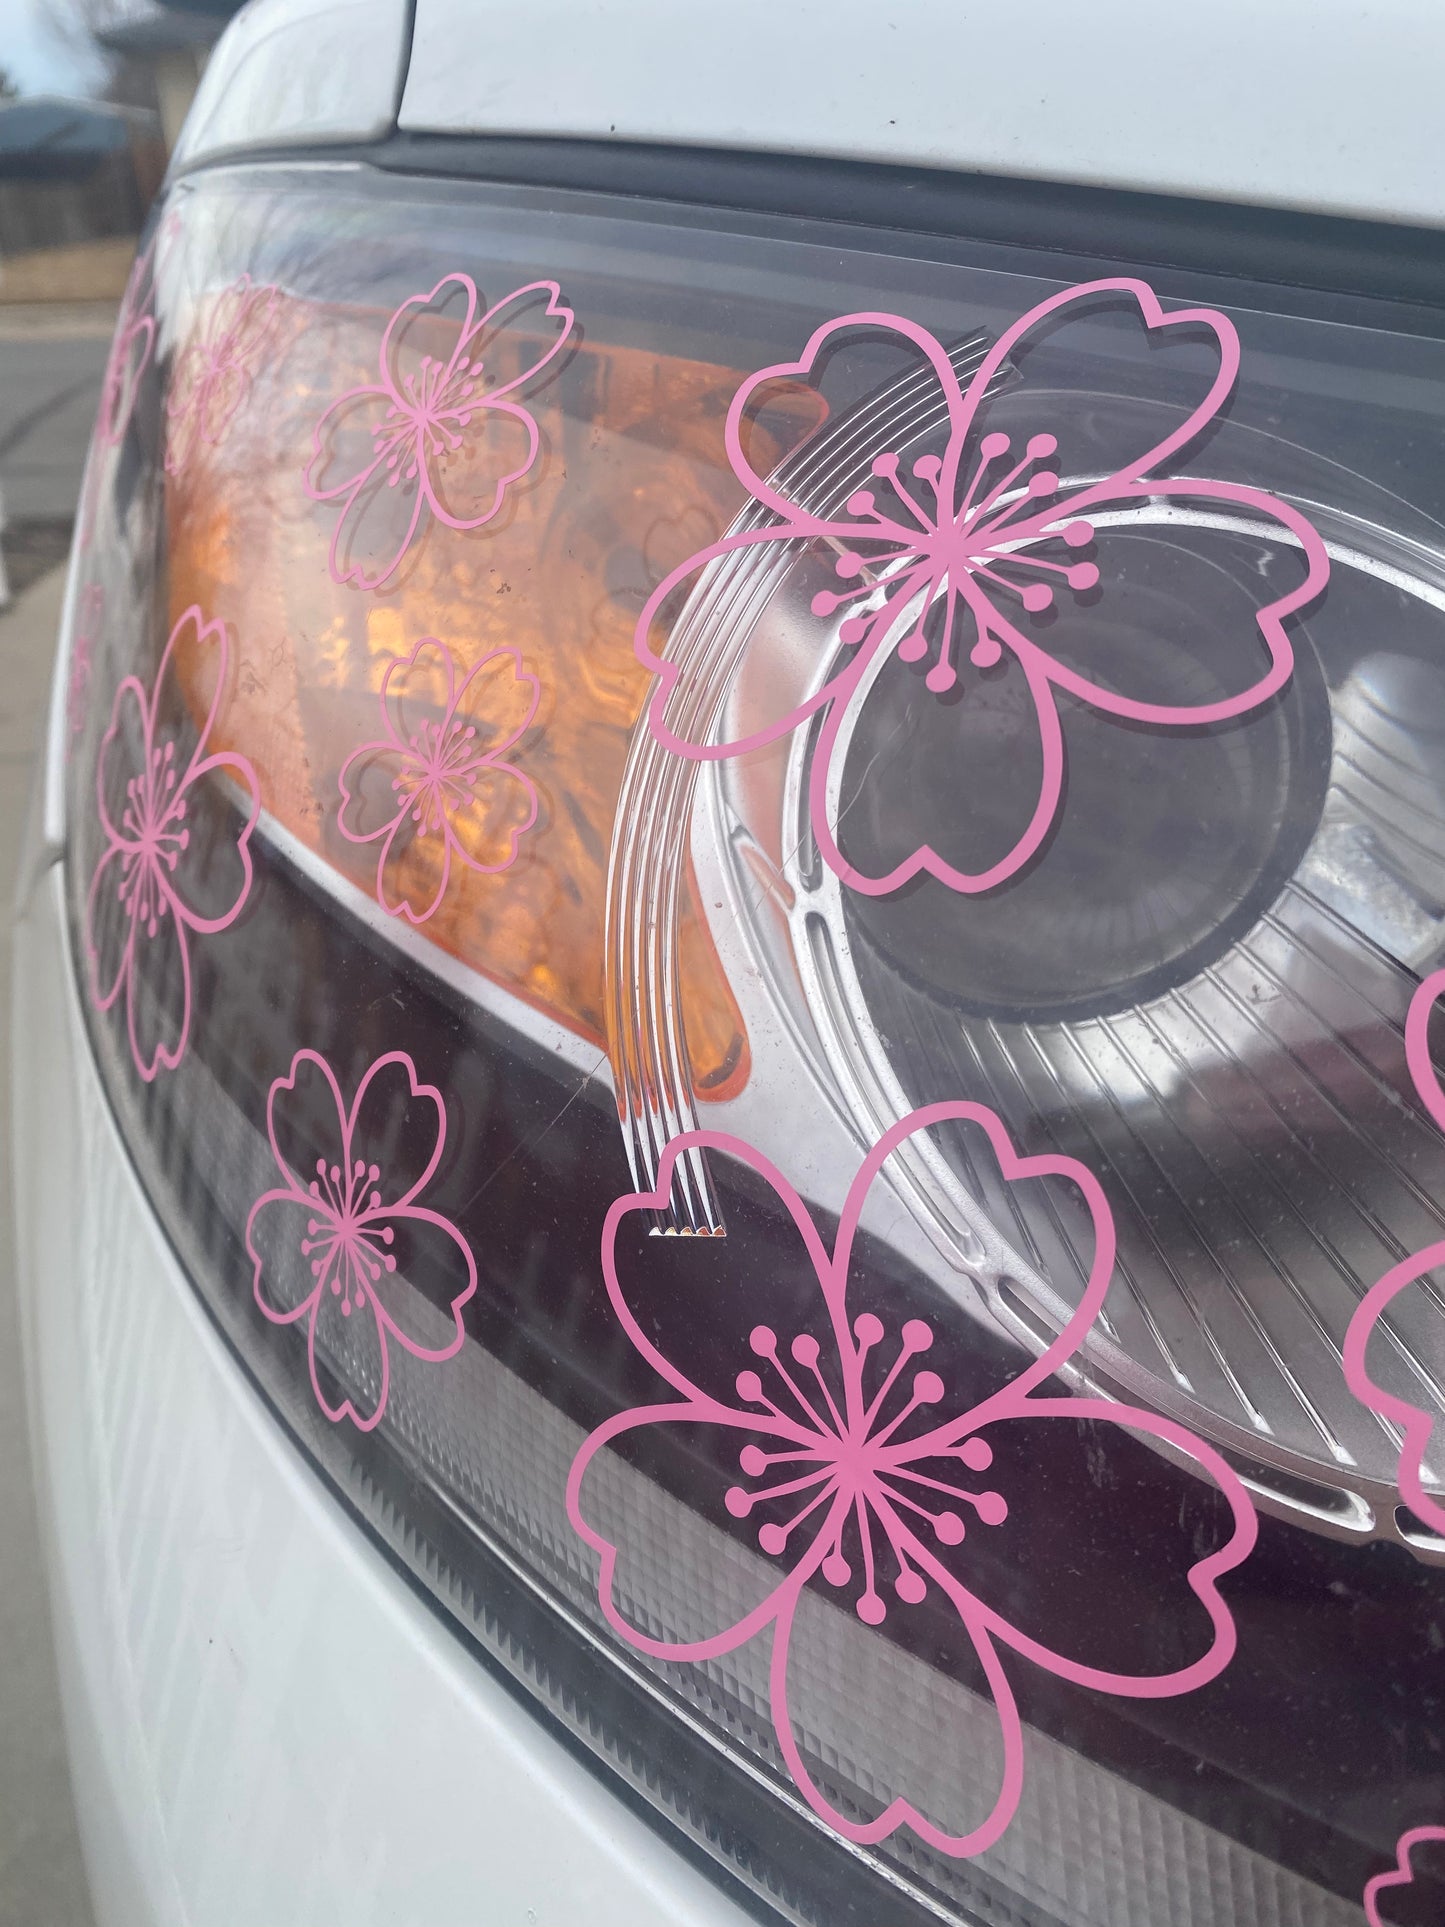 Cherry Blossom Tail Light Car Decal